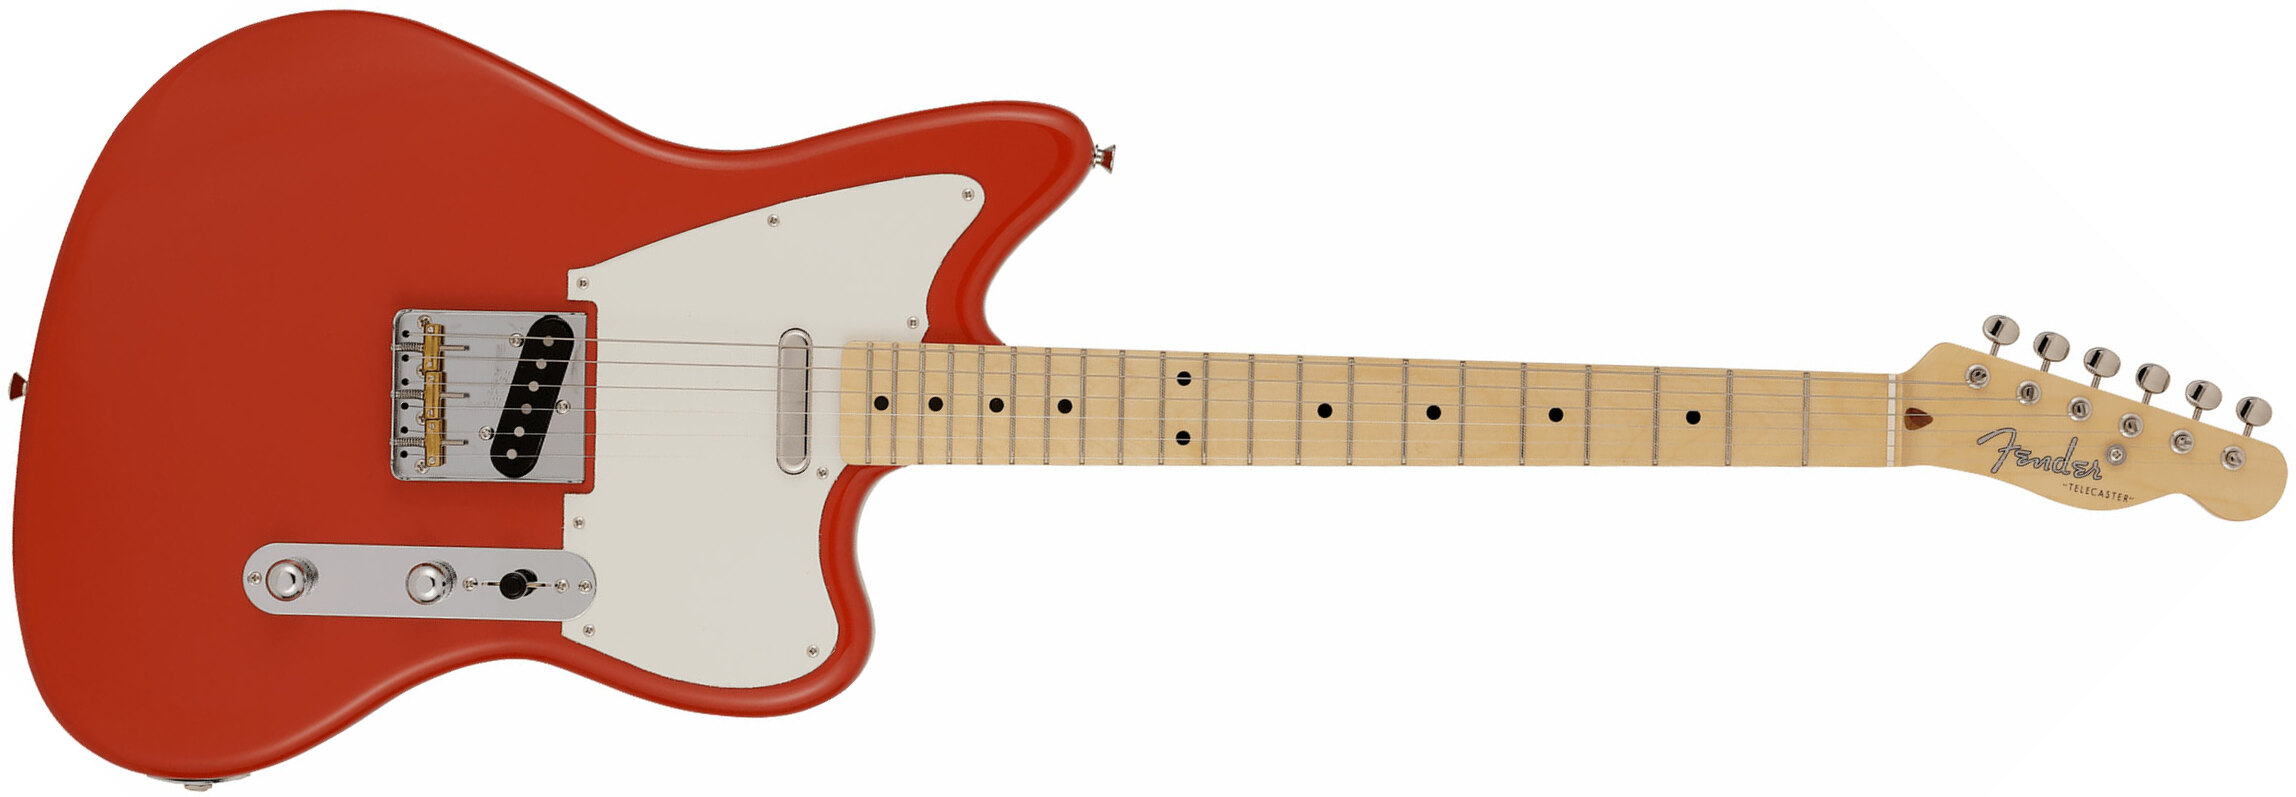 Fender Tele Offset Ltd Jap 2s Ht Mn - Fiesta Red - Retro rock electric guitar - Main picture